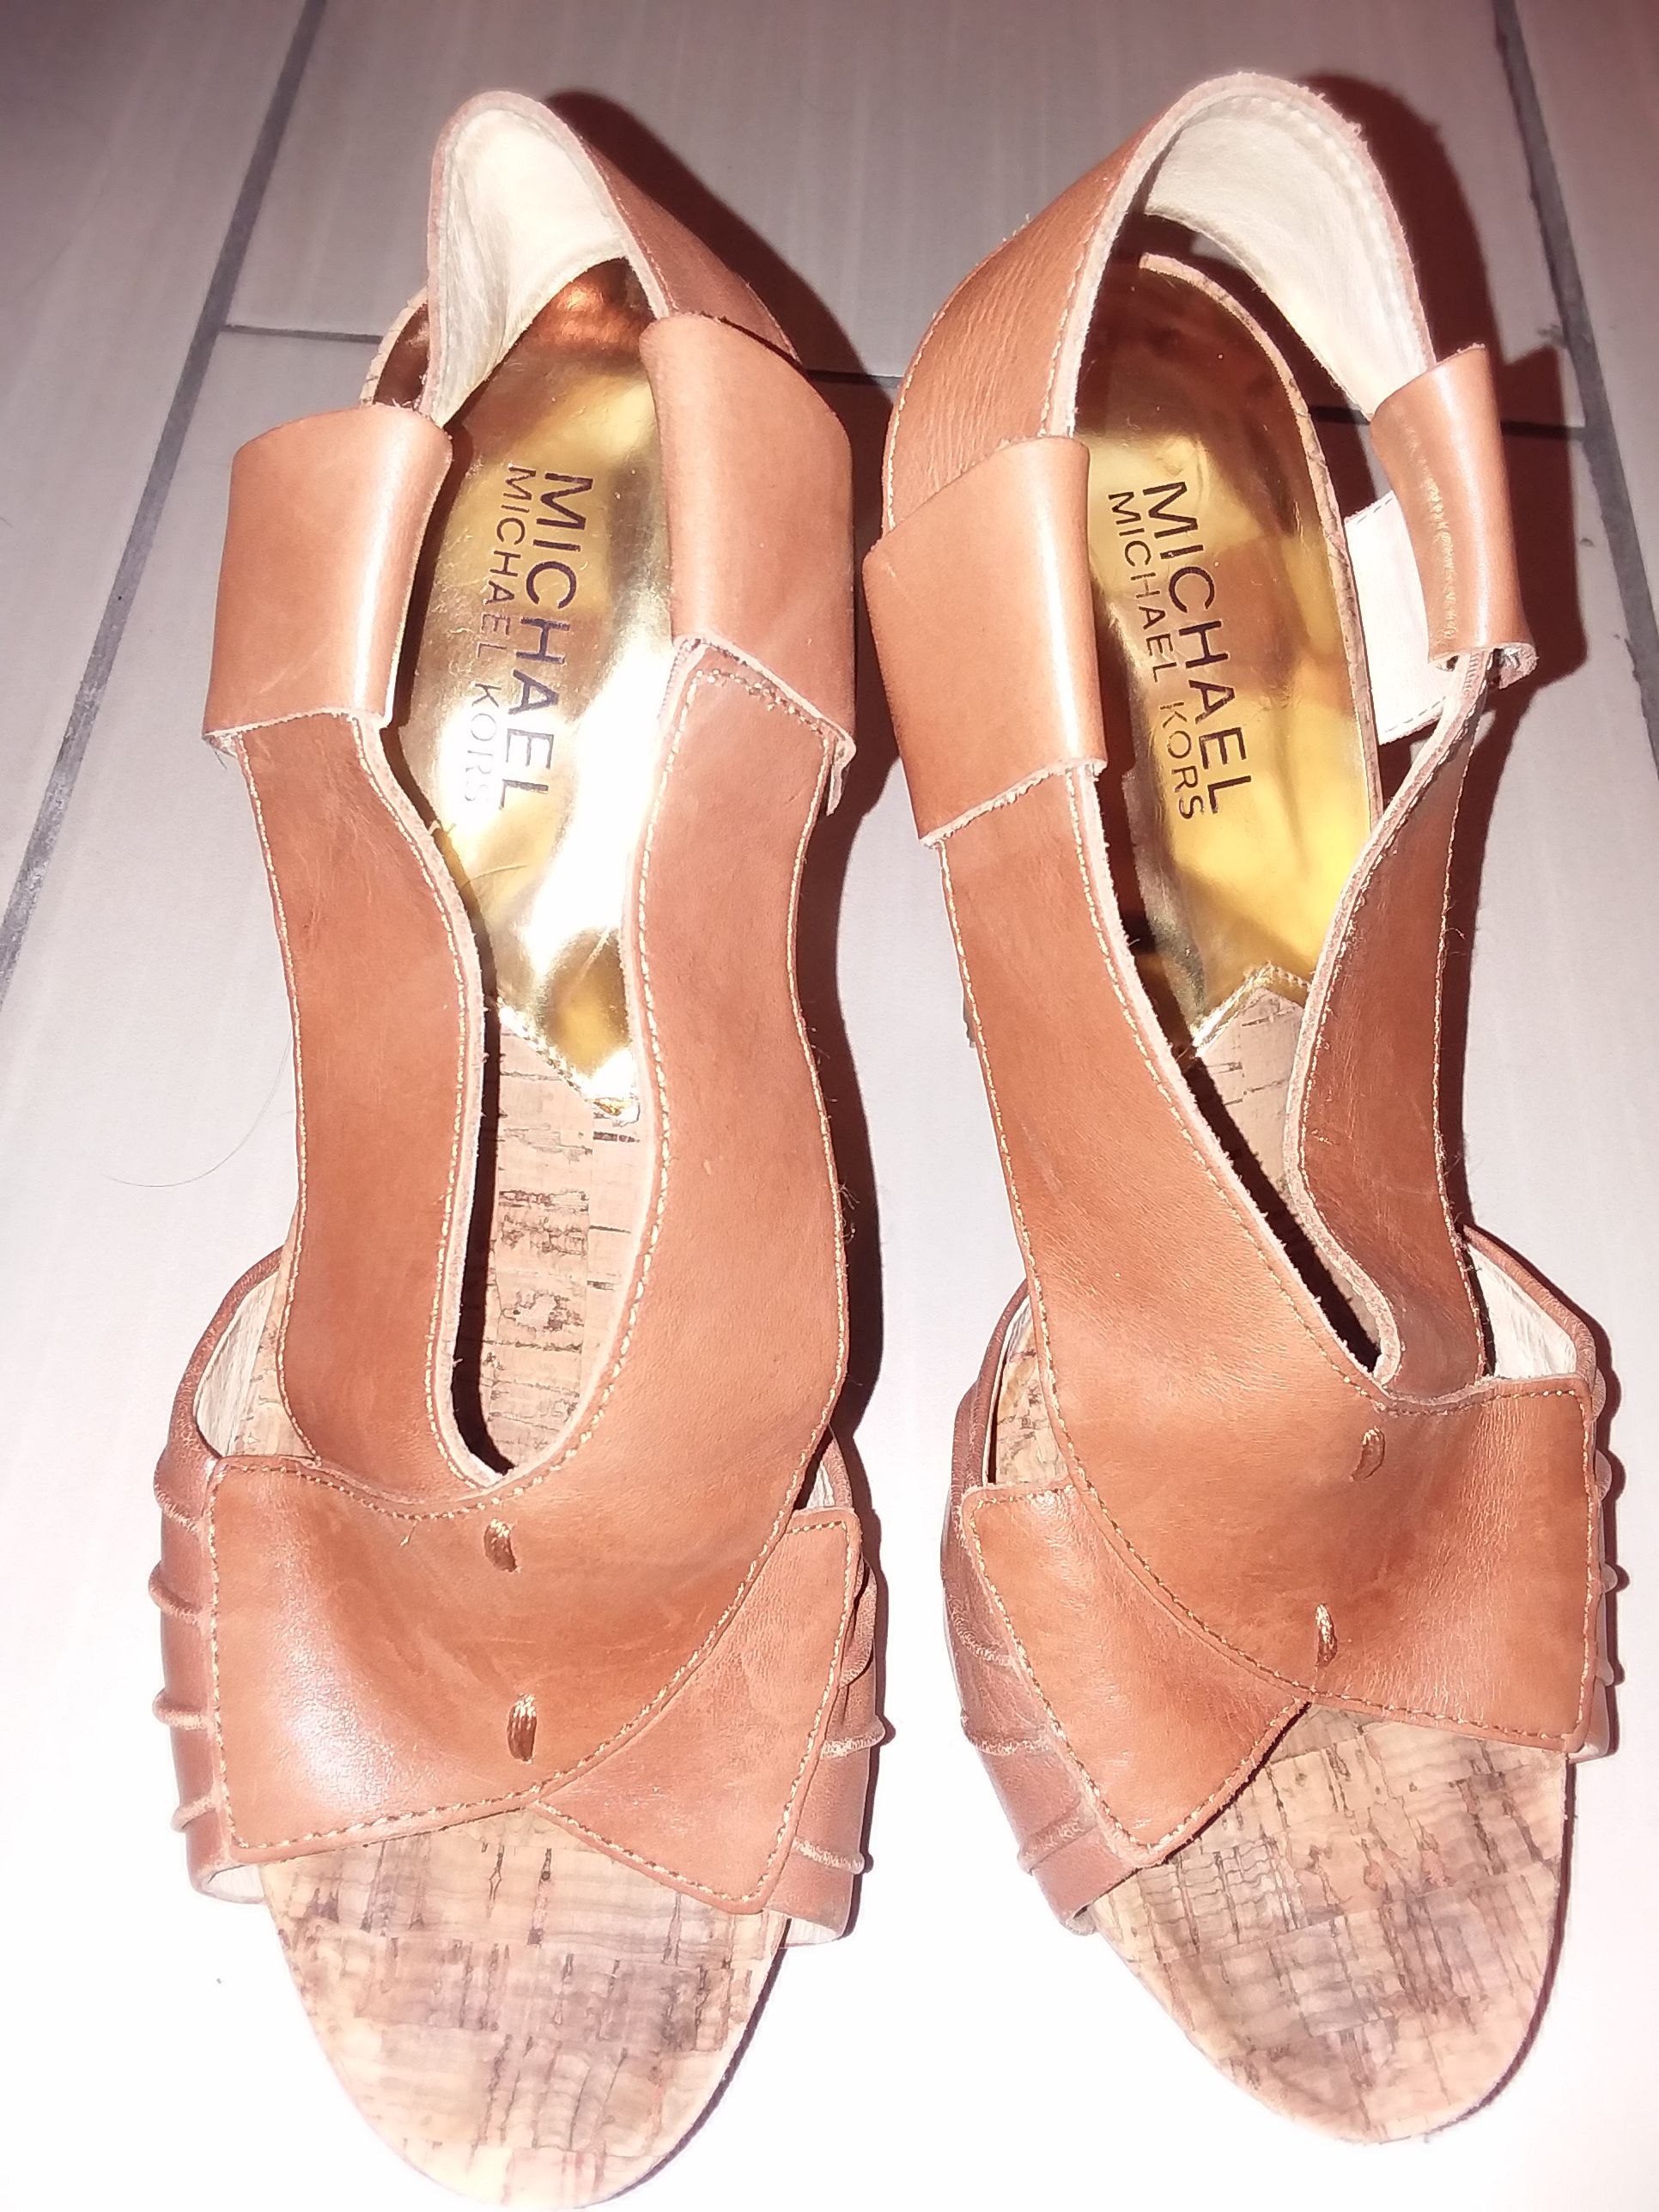 Size 8 Michael Kors ladies shoe